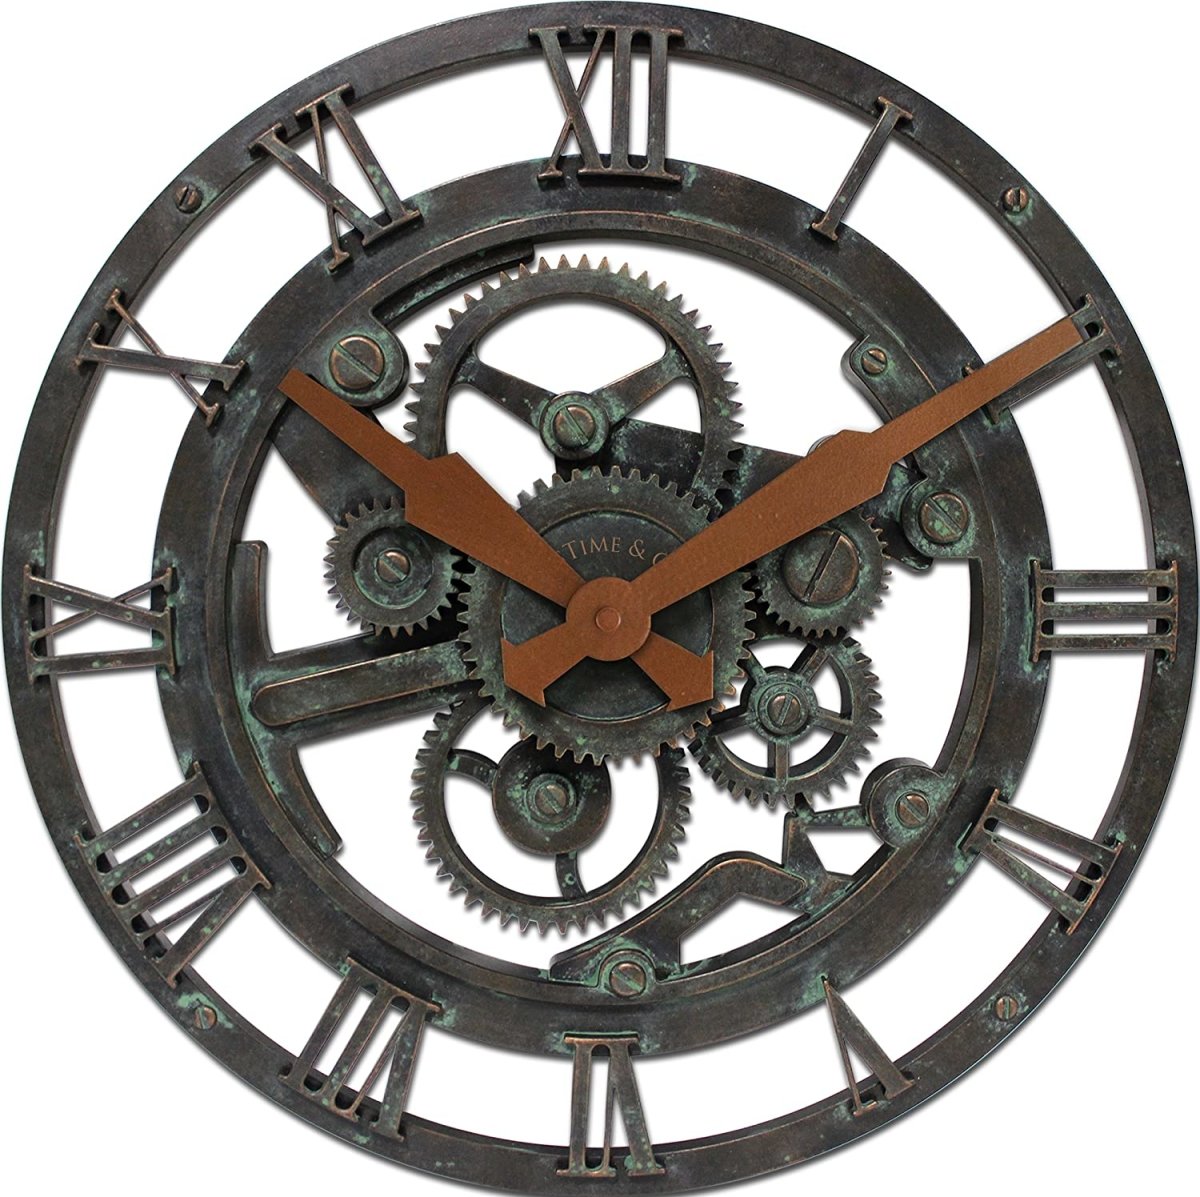 Oxidized Gears Wall Clock My Wall Clock